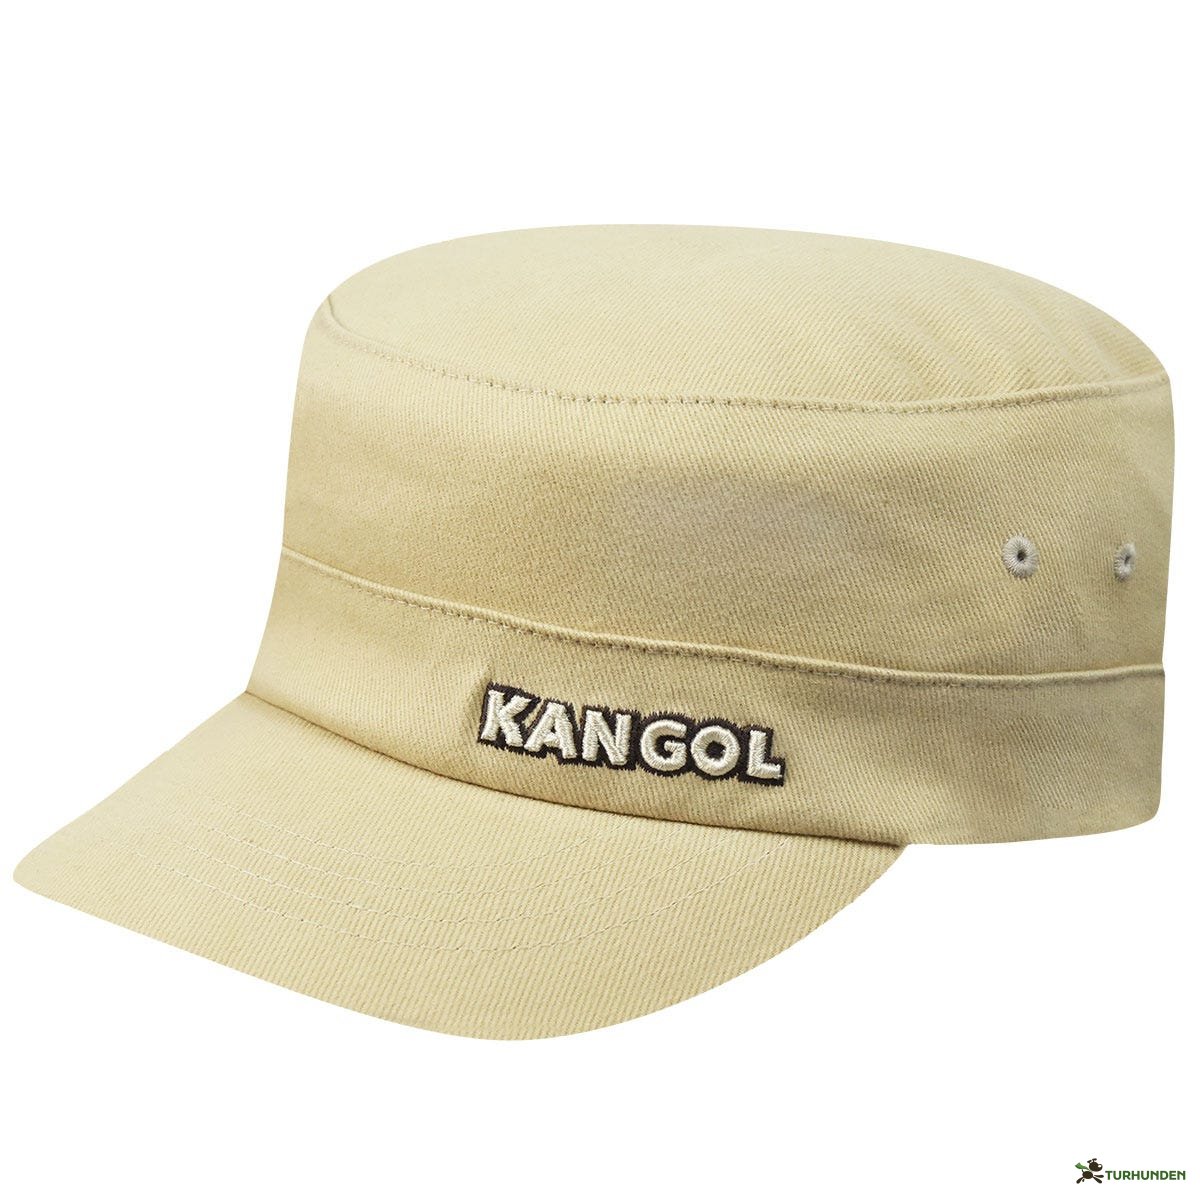 Kangol Cotton Twill Army Cap - Beige